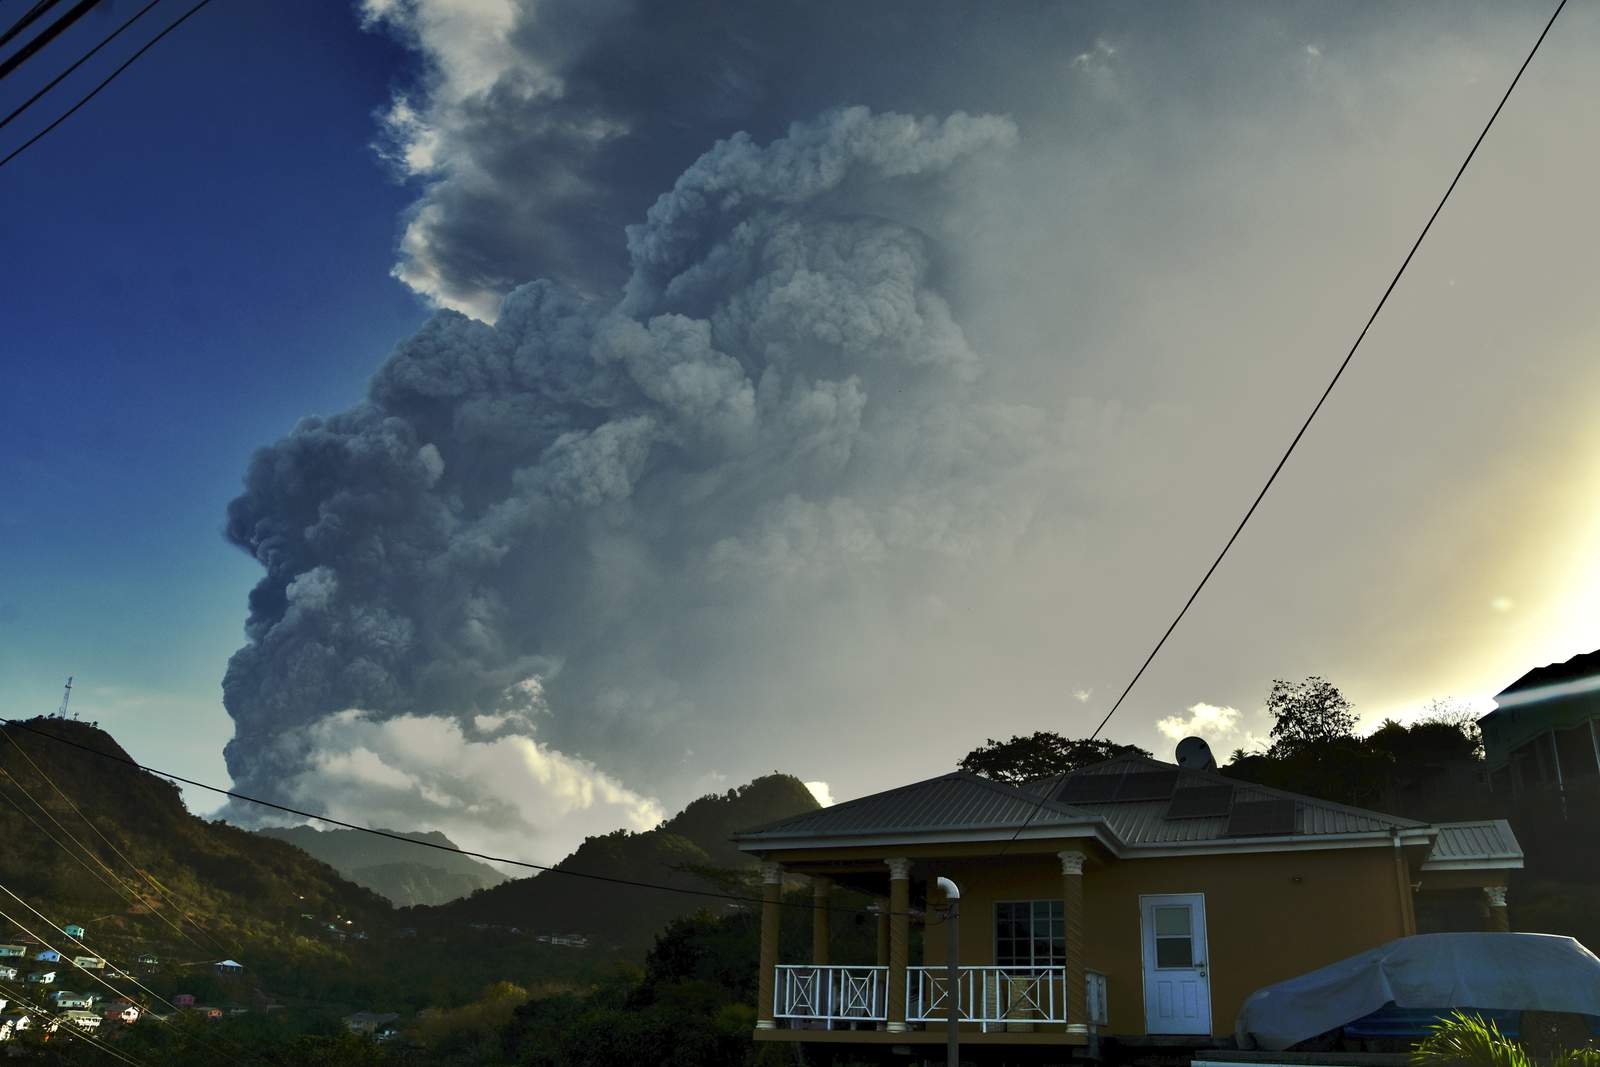 San Vicente busca agua y recursos tras erupción de volcán